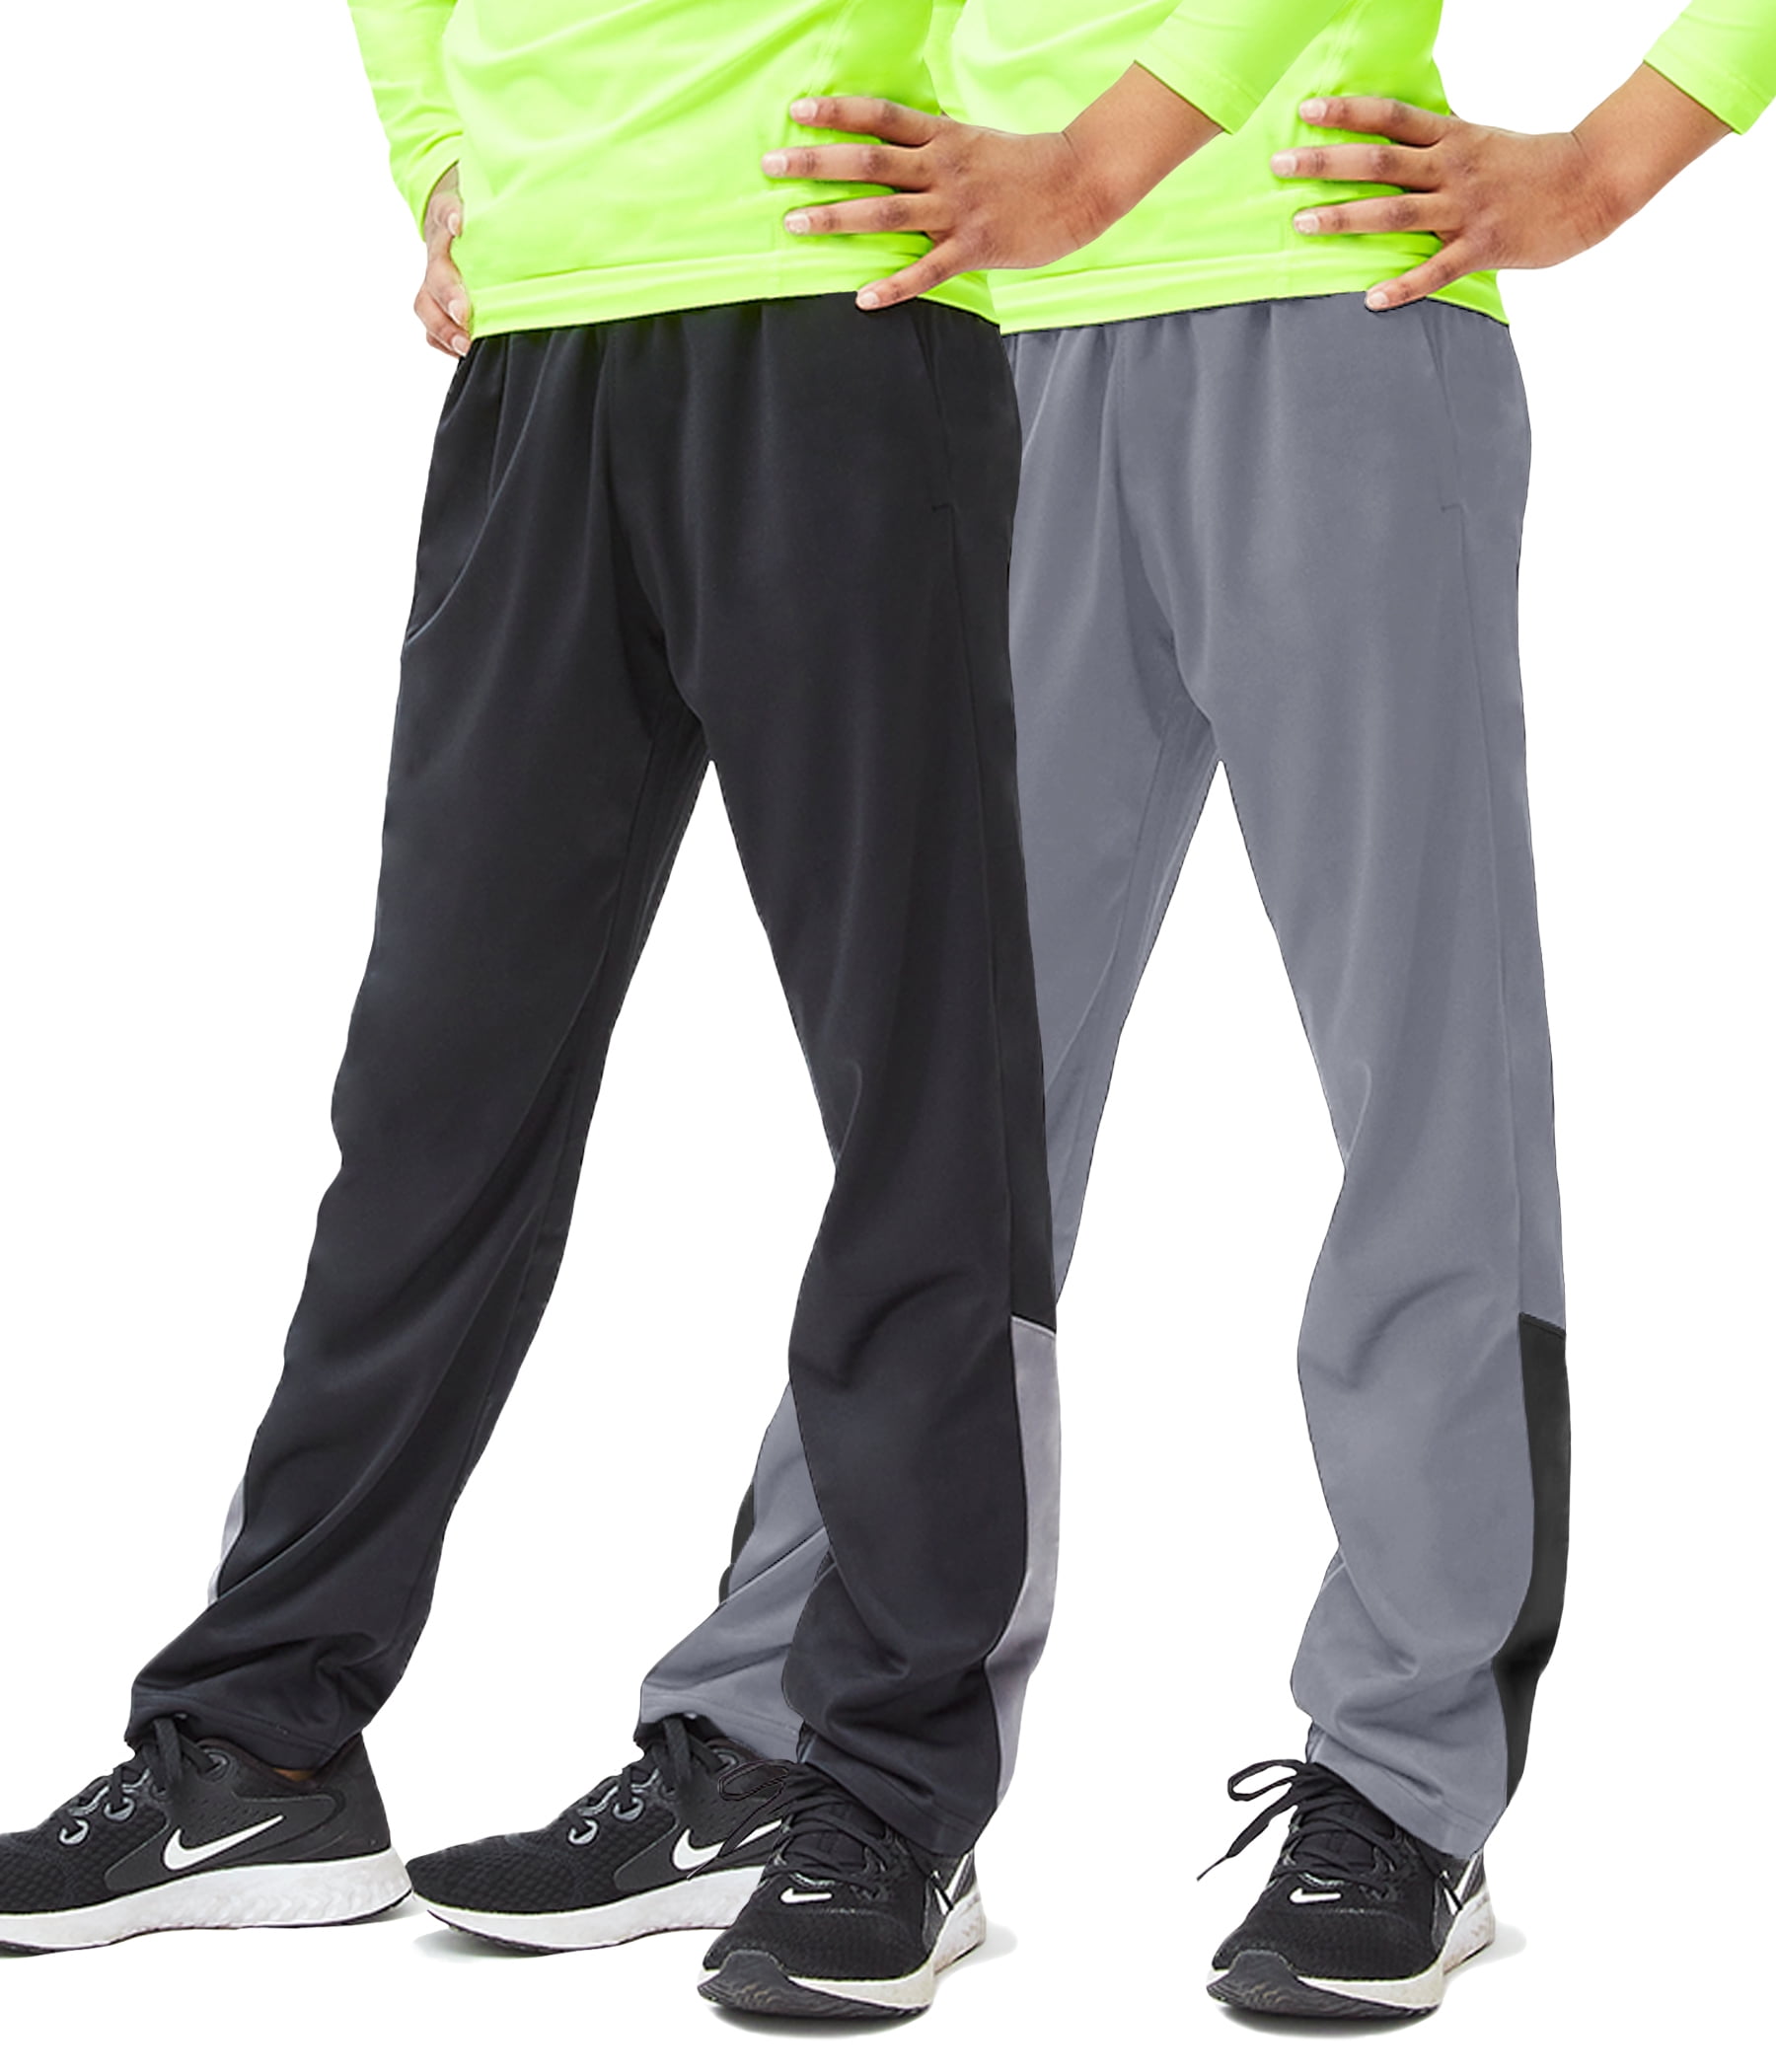 Slopehill Men's Padded Shorts Skate Compression Short Basketball Hip Protective Underwear, Adult Unisex, Size: Medium, Black